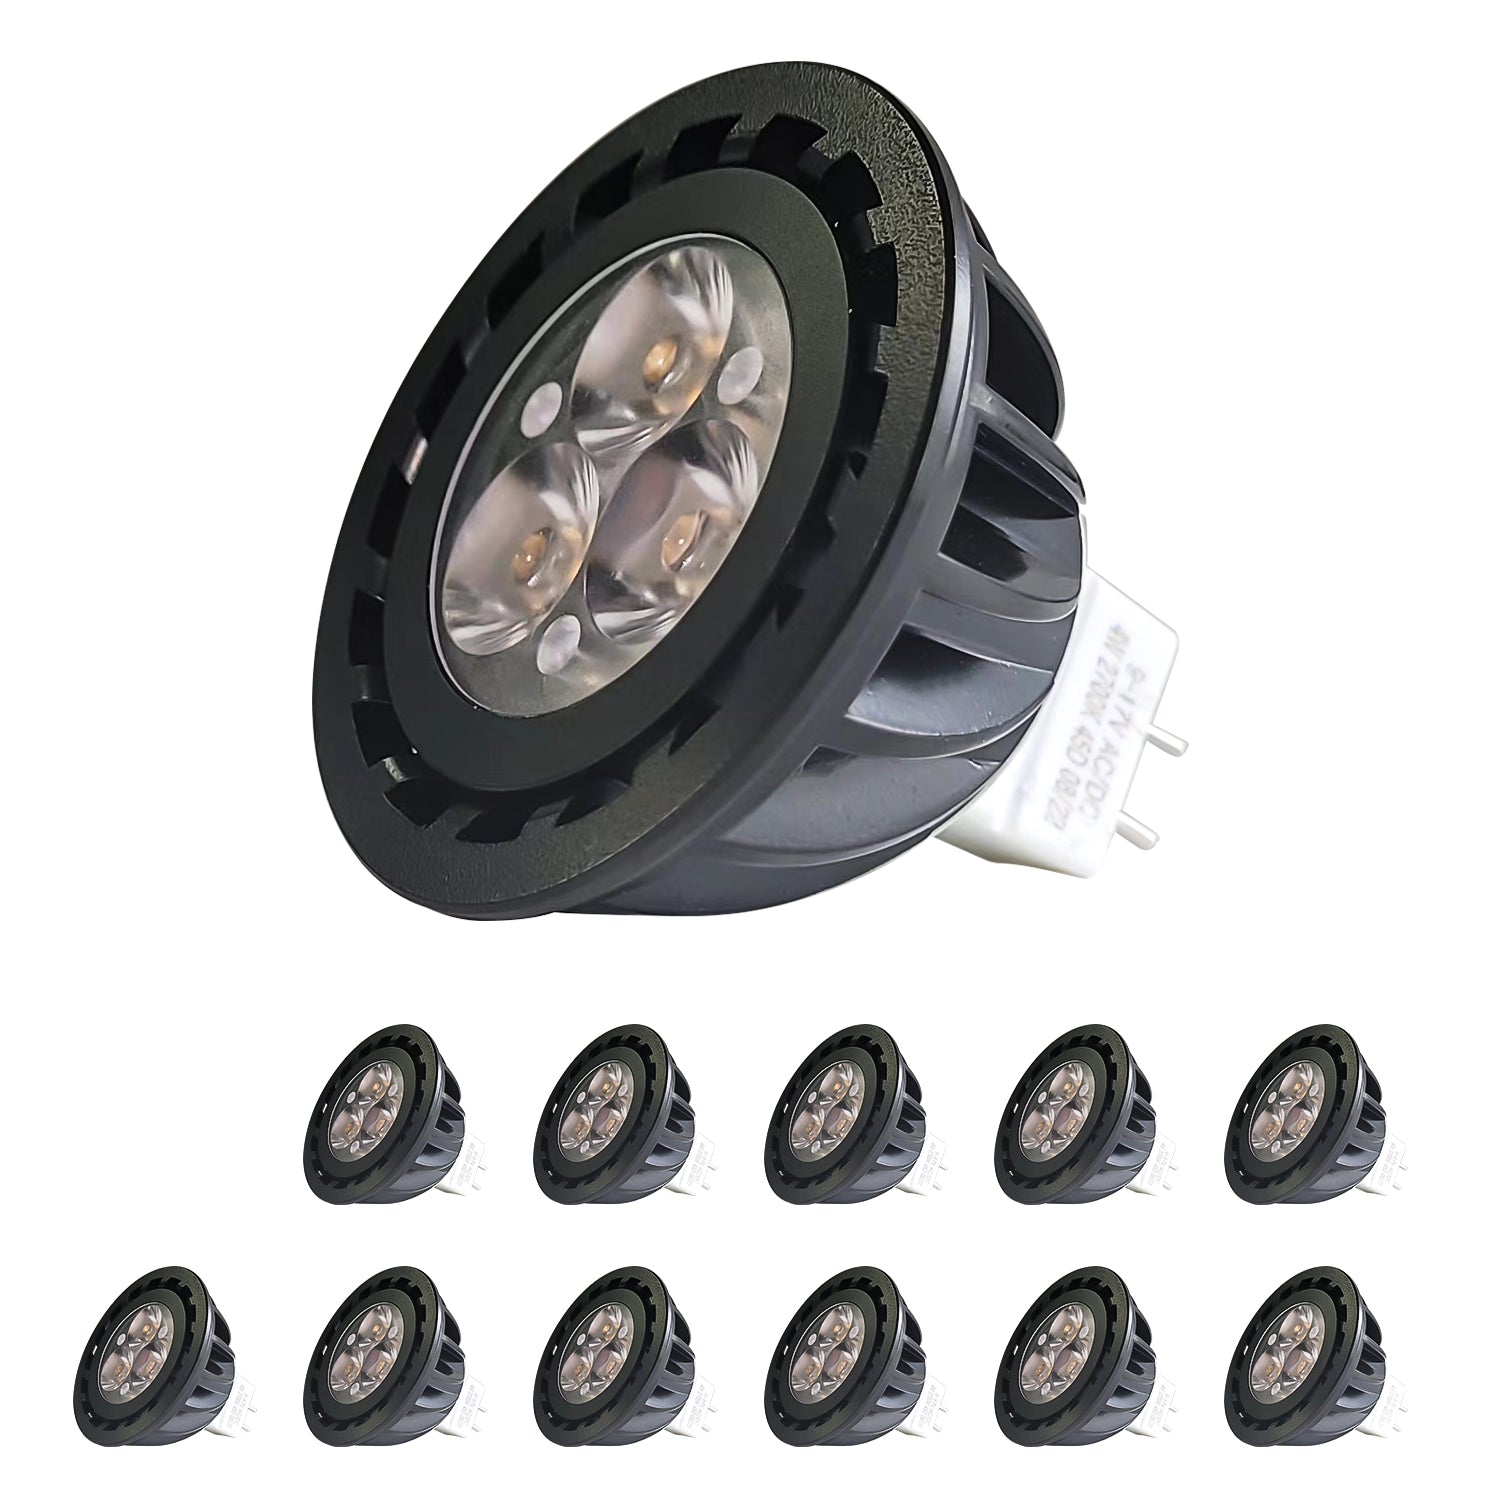 5W MR16 LED bulb with GU5.3 bi-pin base for outdoor waterproof lighting, set of multiple bulbs display.